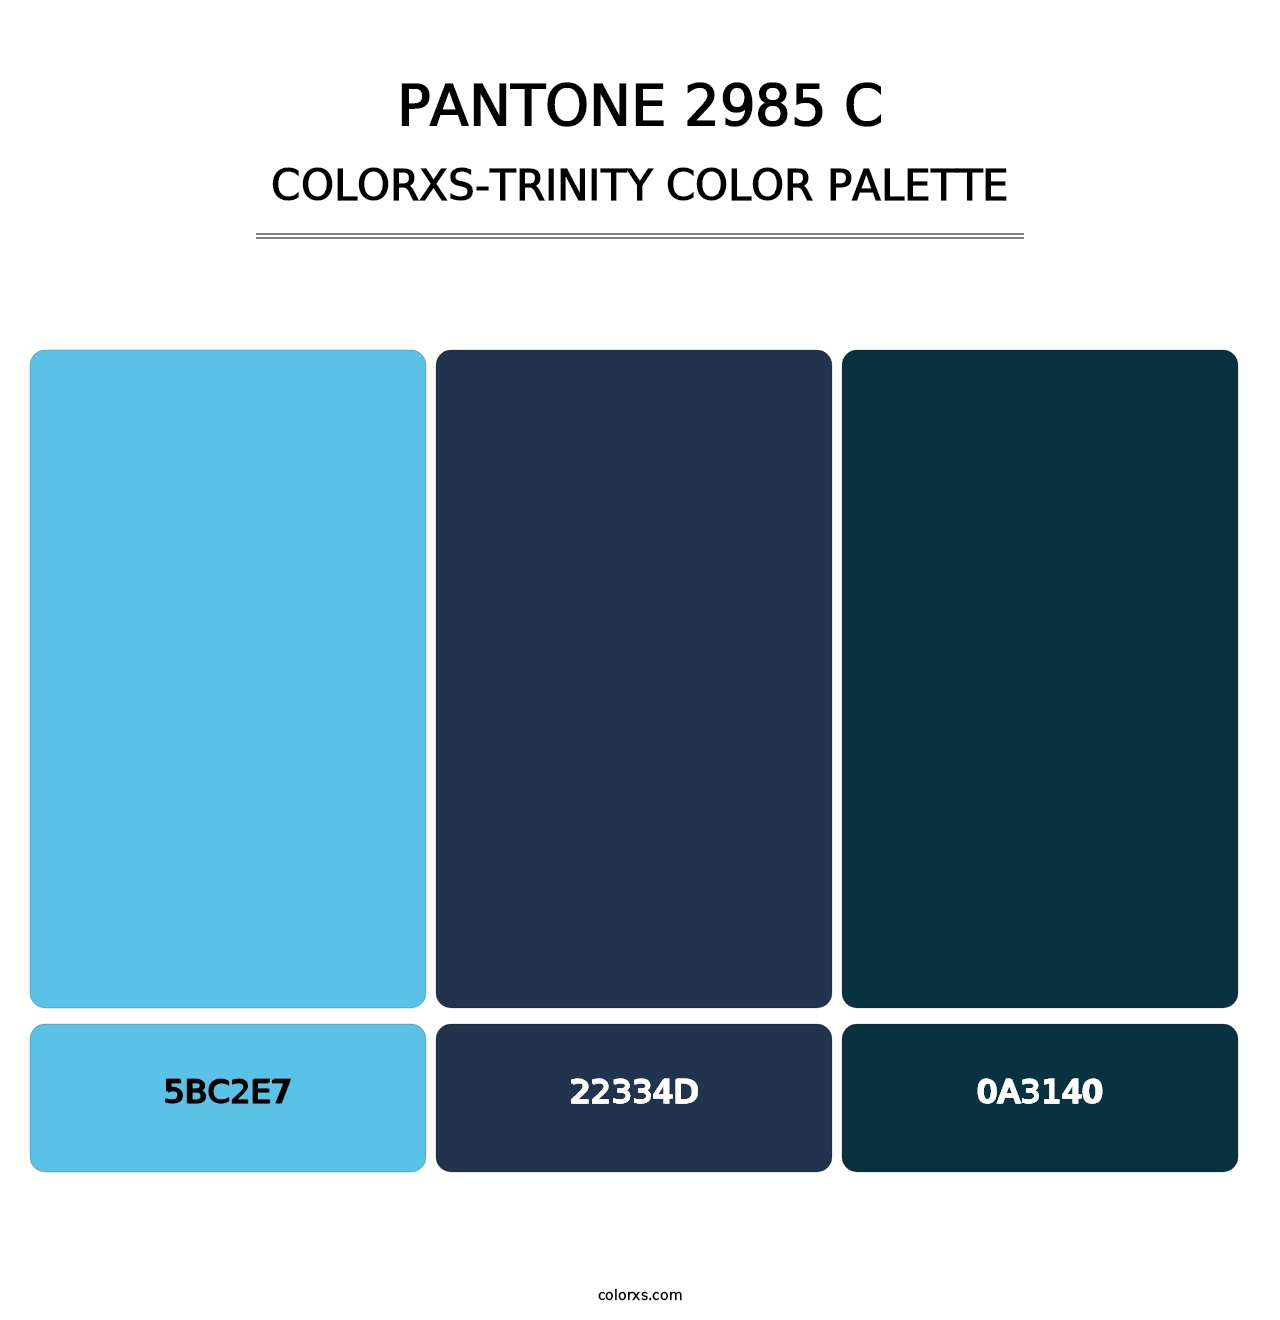 PANTONE 2985 C - Colorxs Trinity Palette